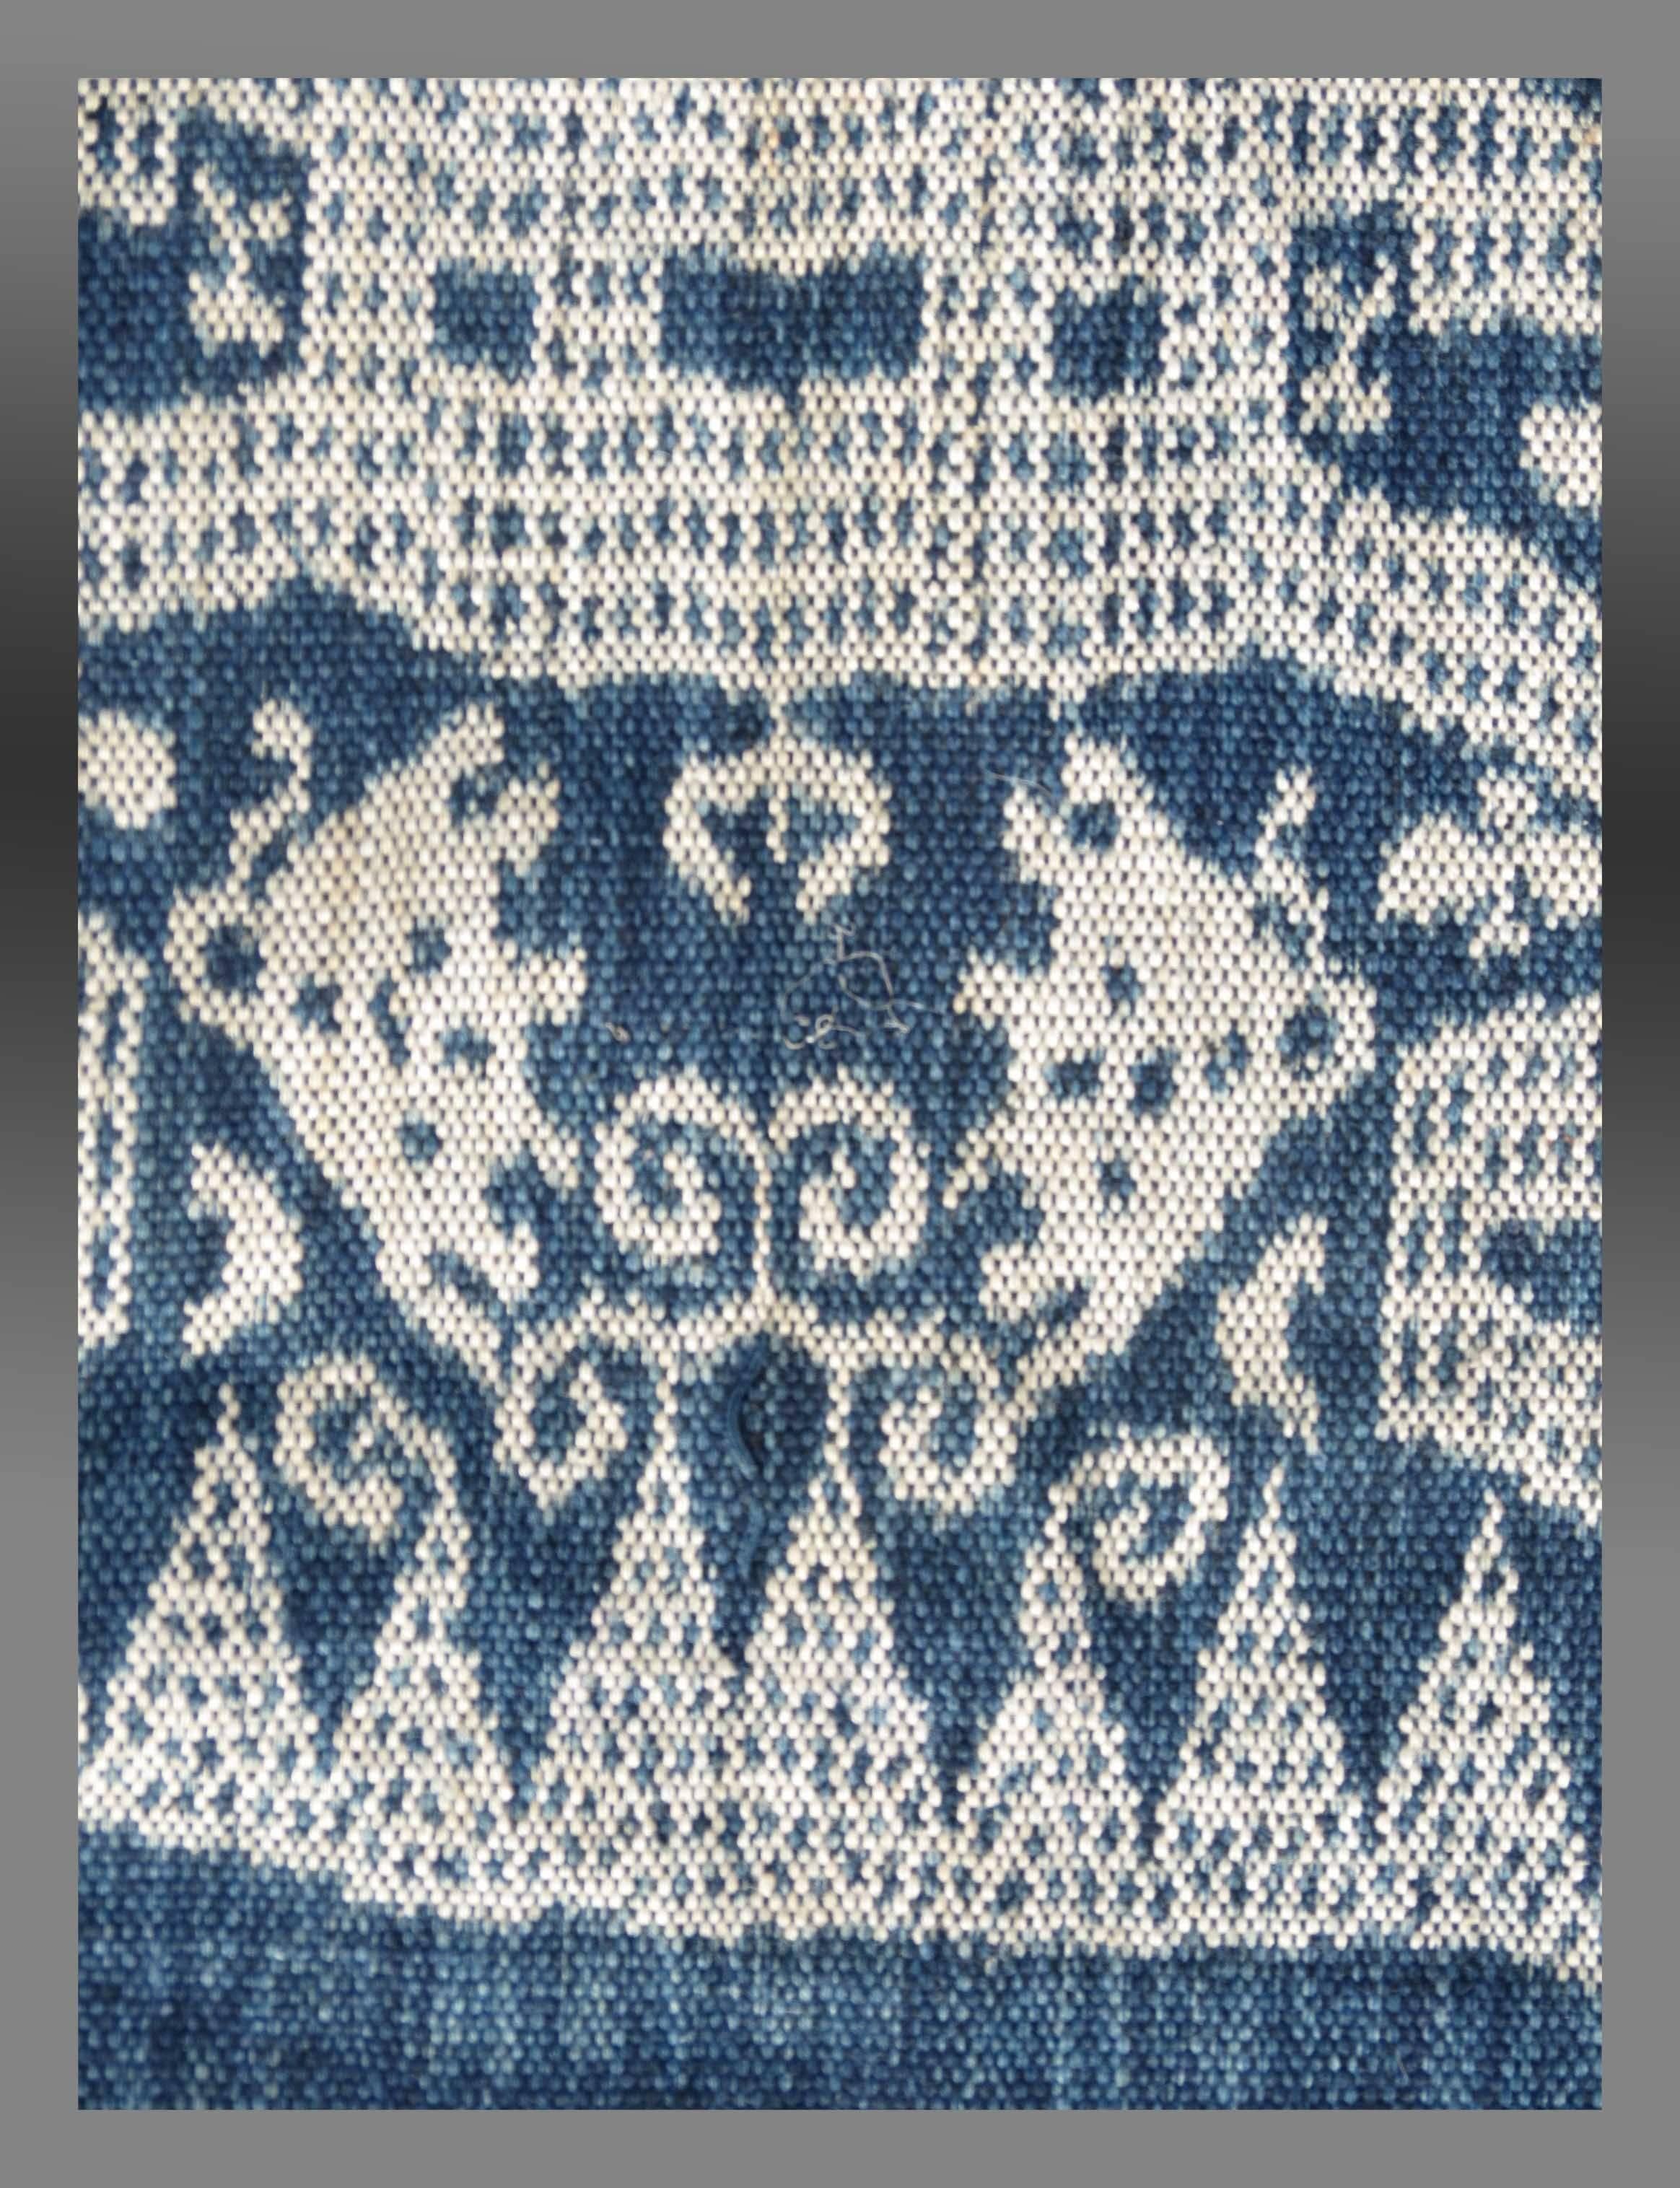 20th Century West Timor Tribal Cotton Ikat Textile, Decorative/Unusual, 1960s-1970s